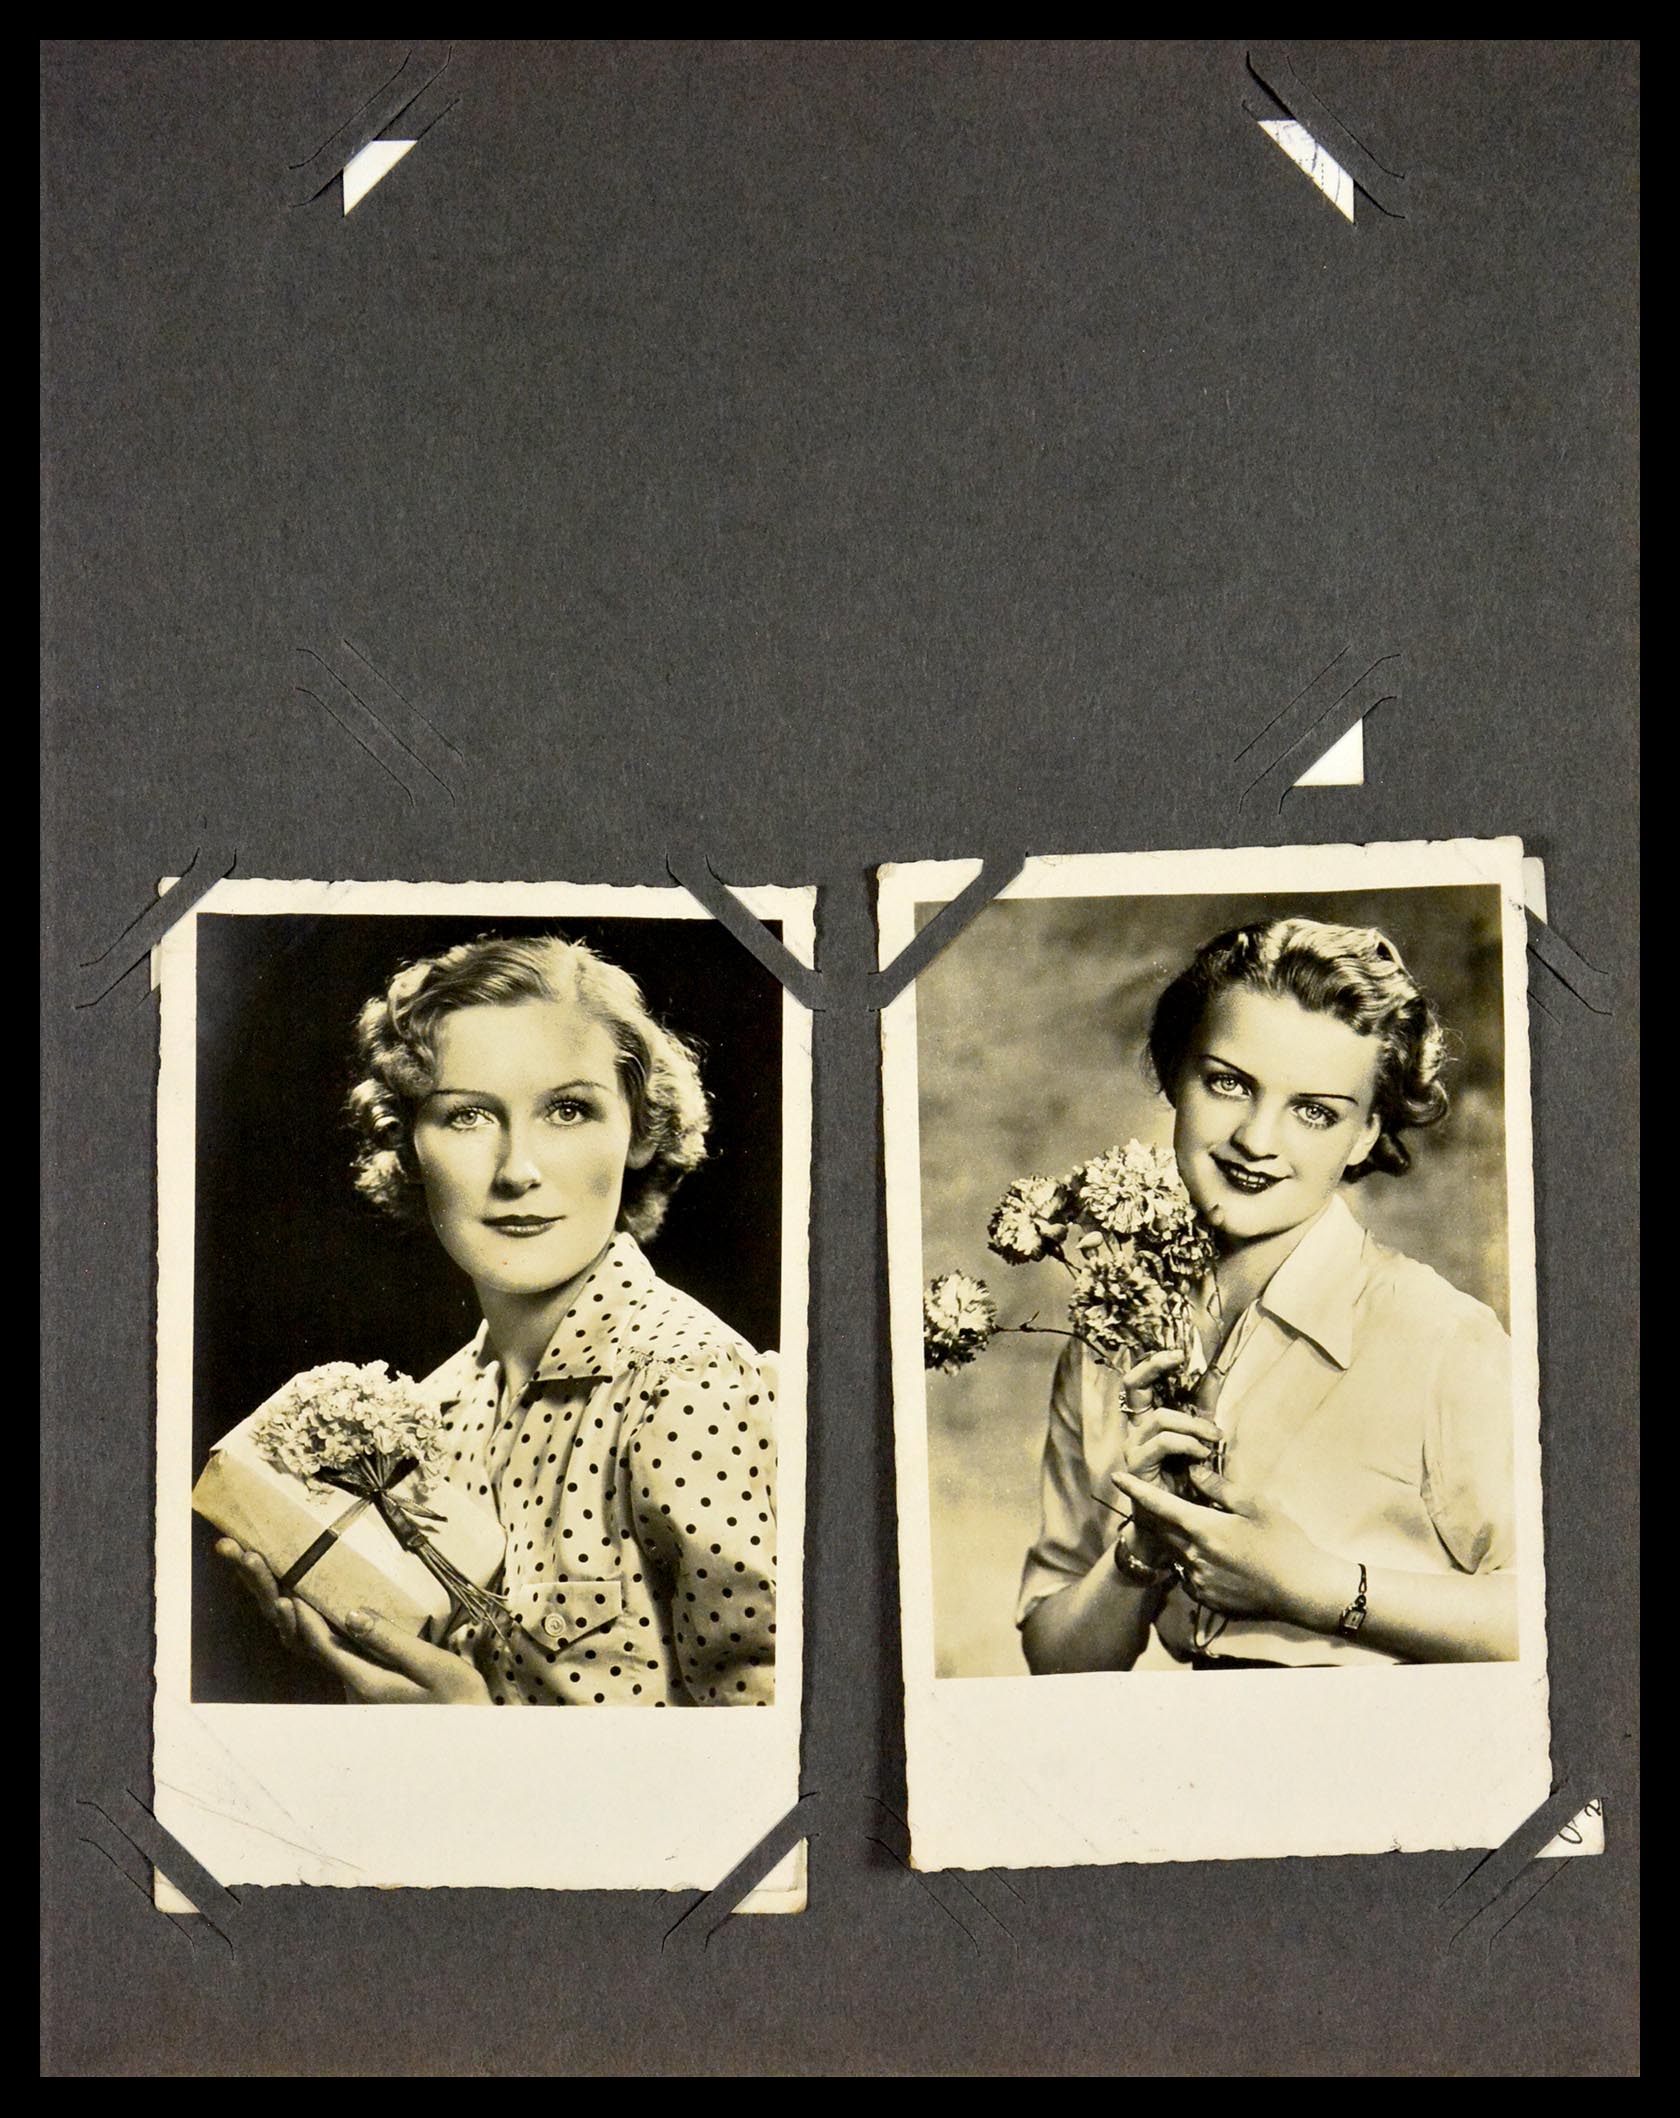 29518 034 - 29518 Netherlands picture postcards 1939-1940.